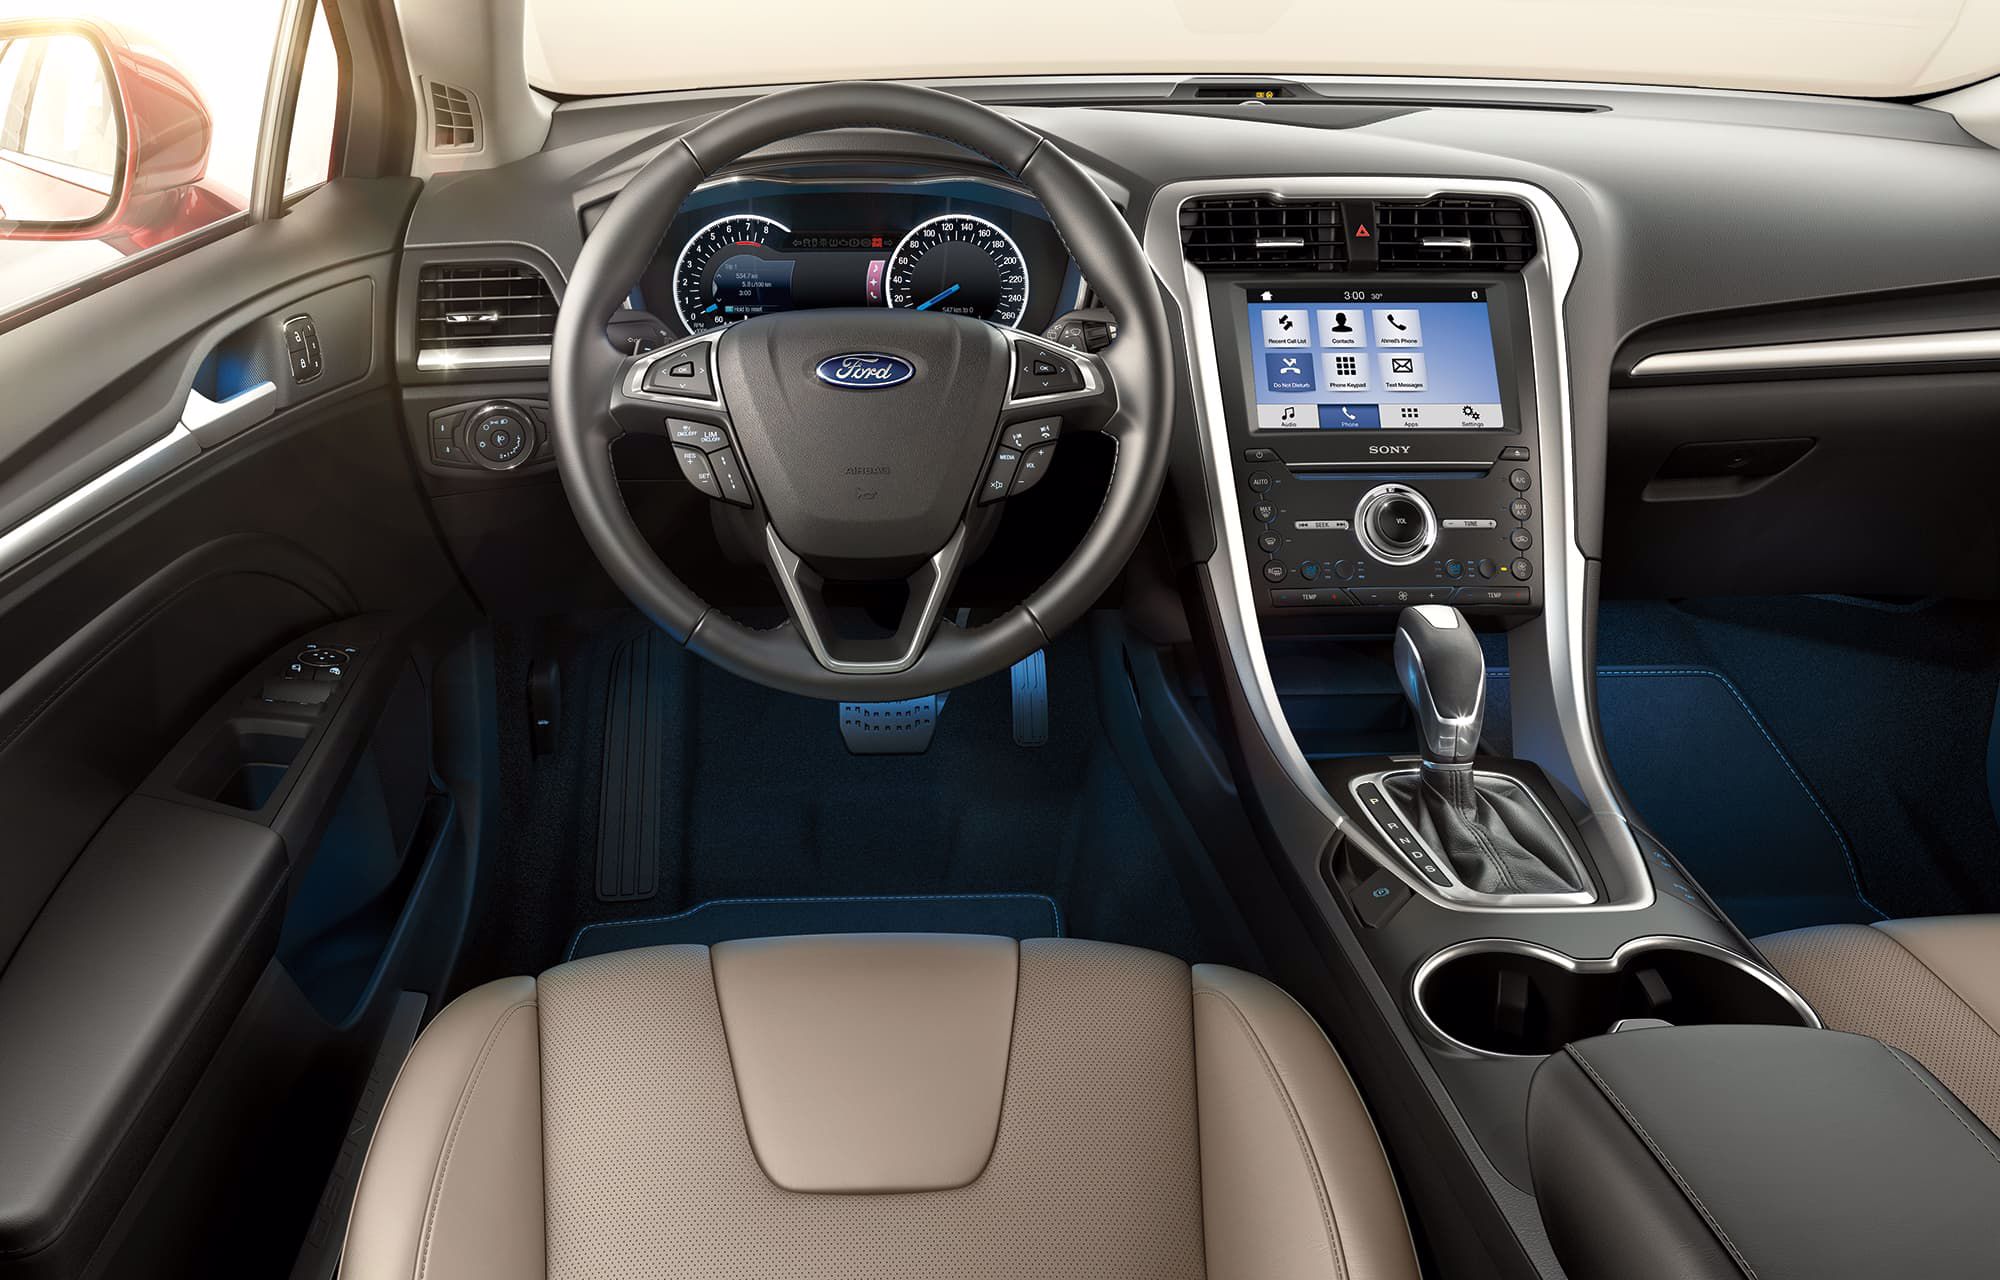 Форд мондео купить цены. Ford Mondeo 2021 Interior. Ford Mondeo 2016 салон. Форд Мондео 5. Форд Мондео Титаниум 2020.